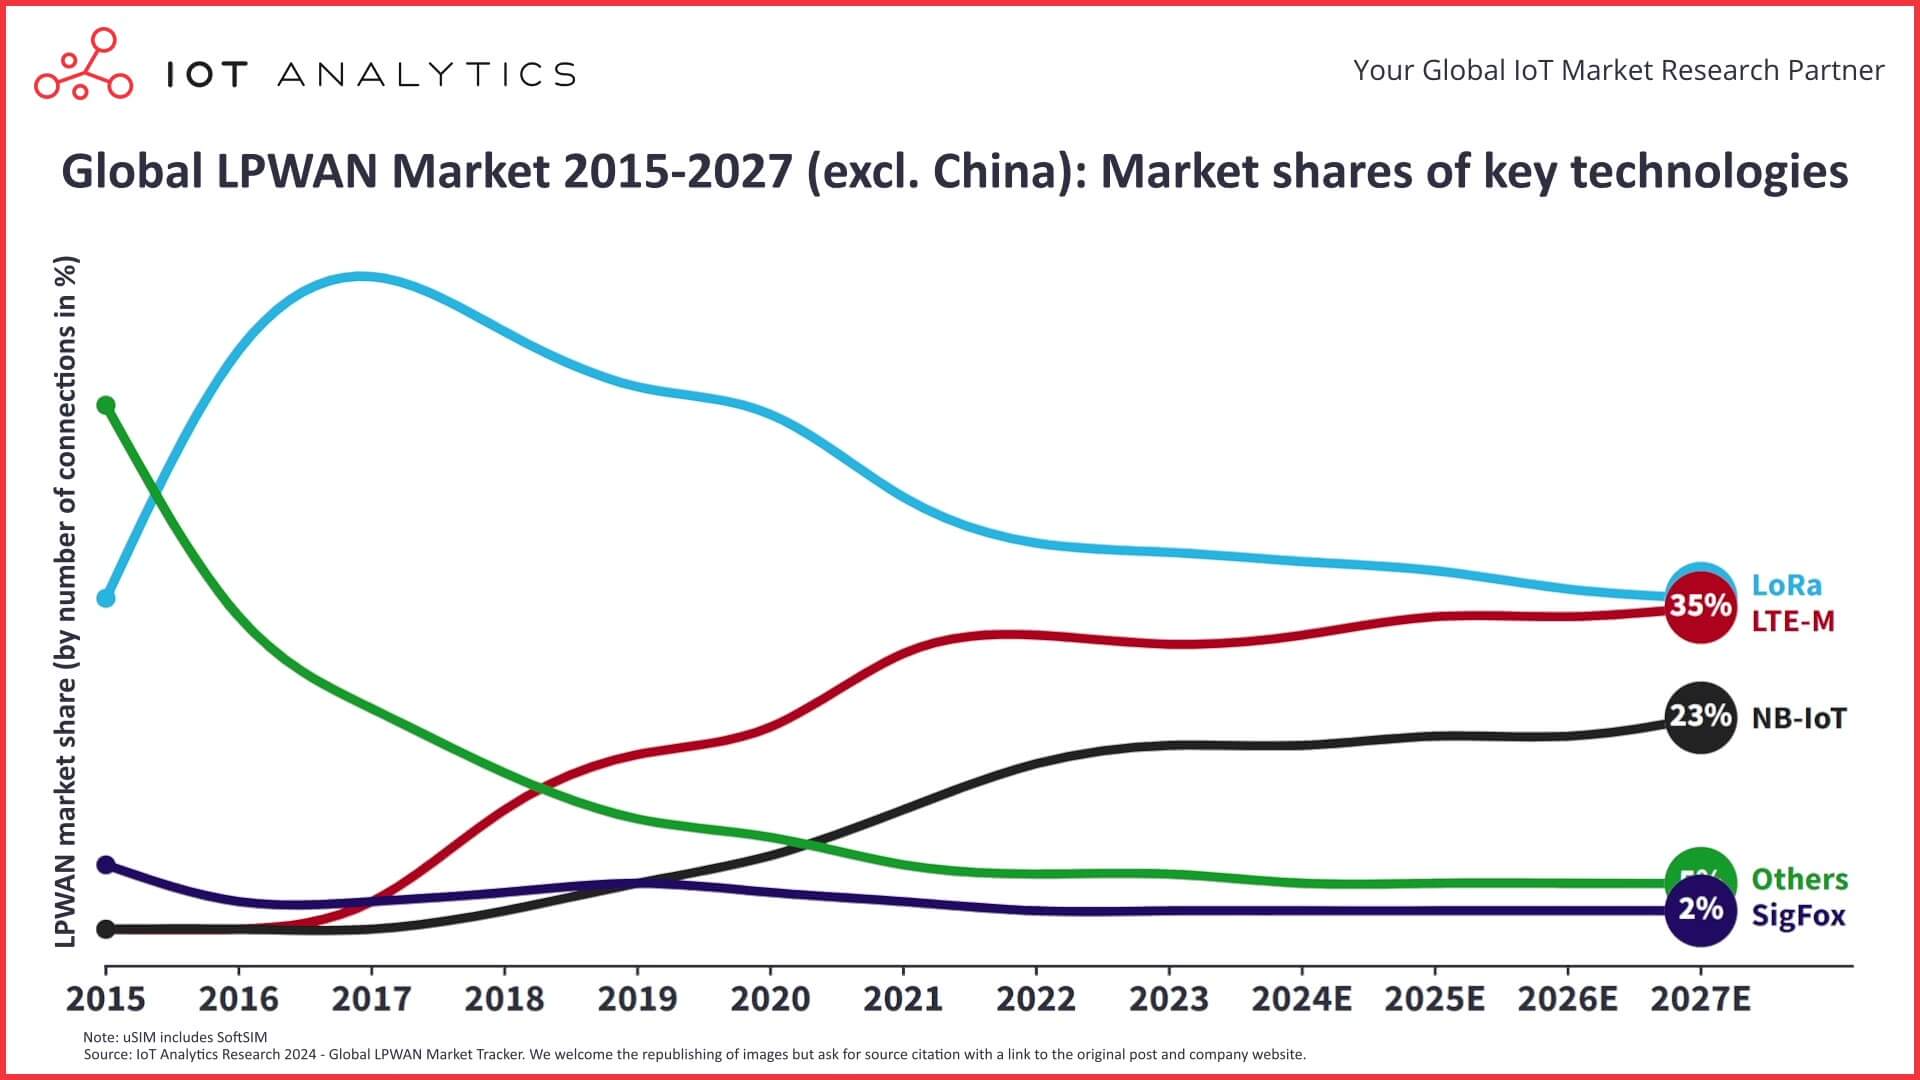 chart: Global LPWAN market 2015-2027: Excluding China Market shares of key technologies